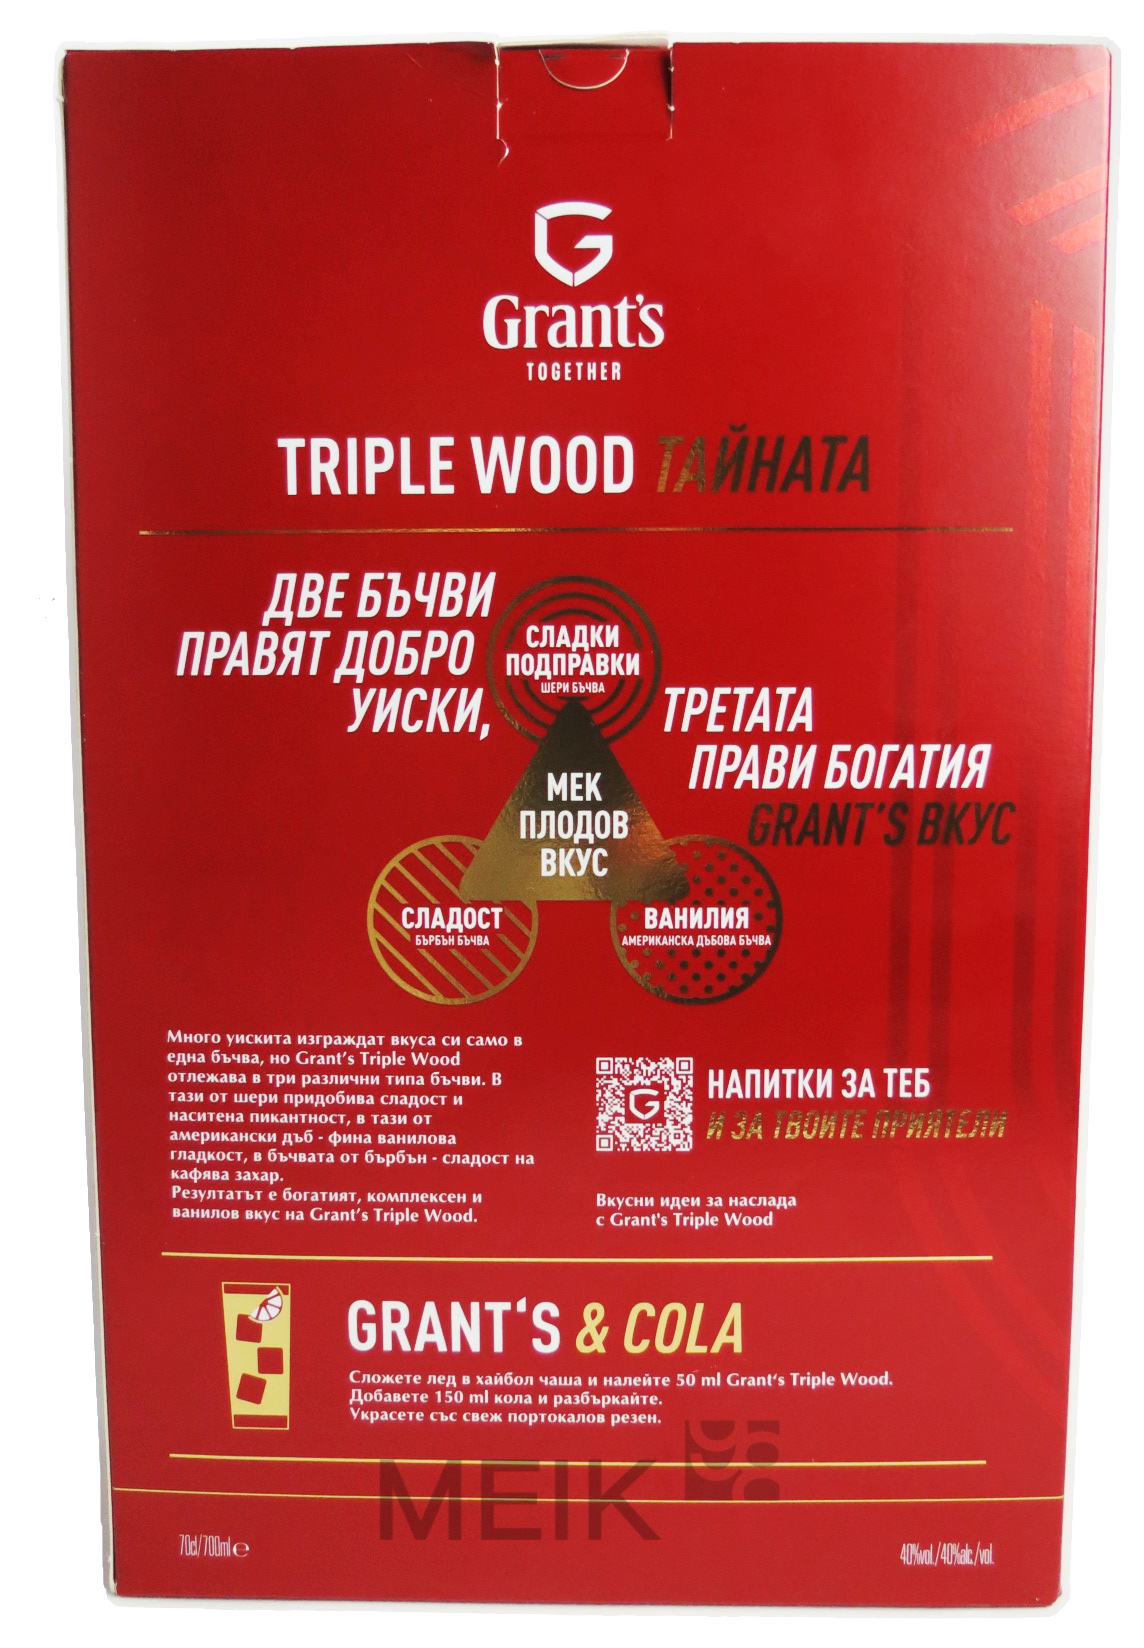 Grants Triple Wood Gift Set with 2 glasses | MEIK 98